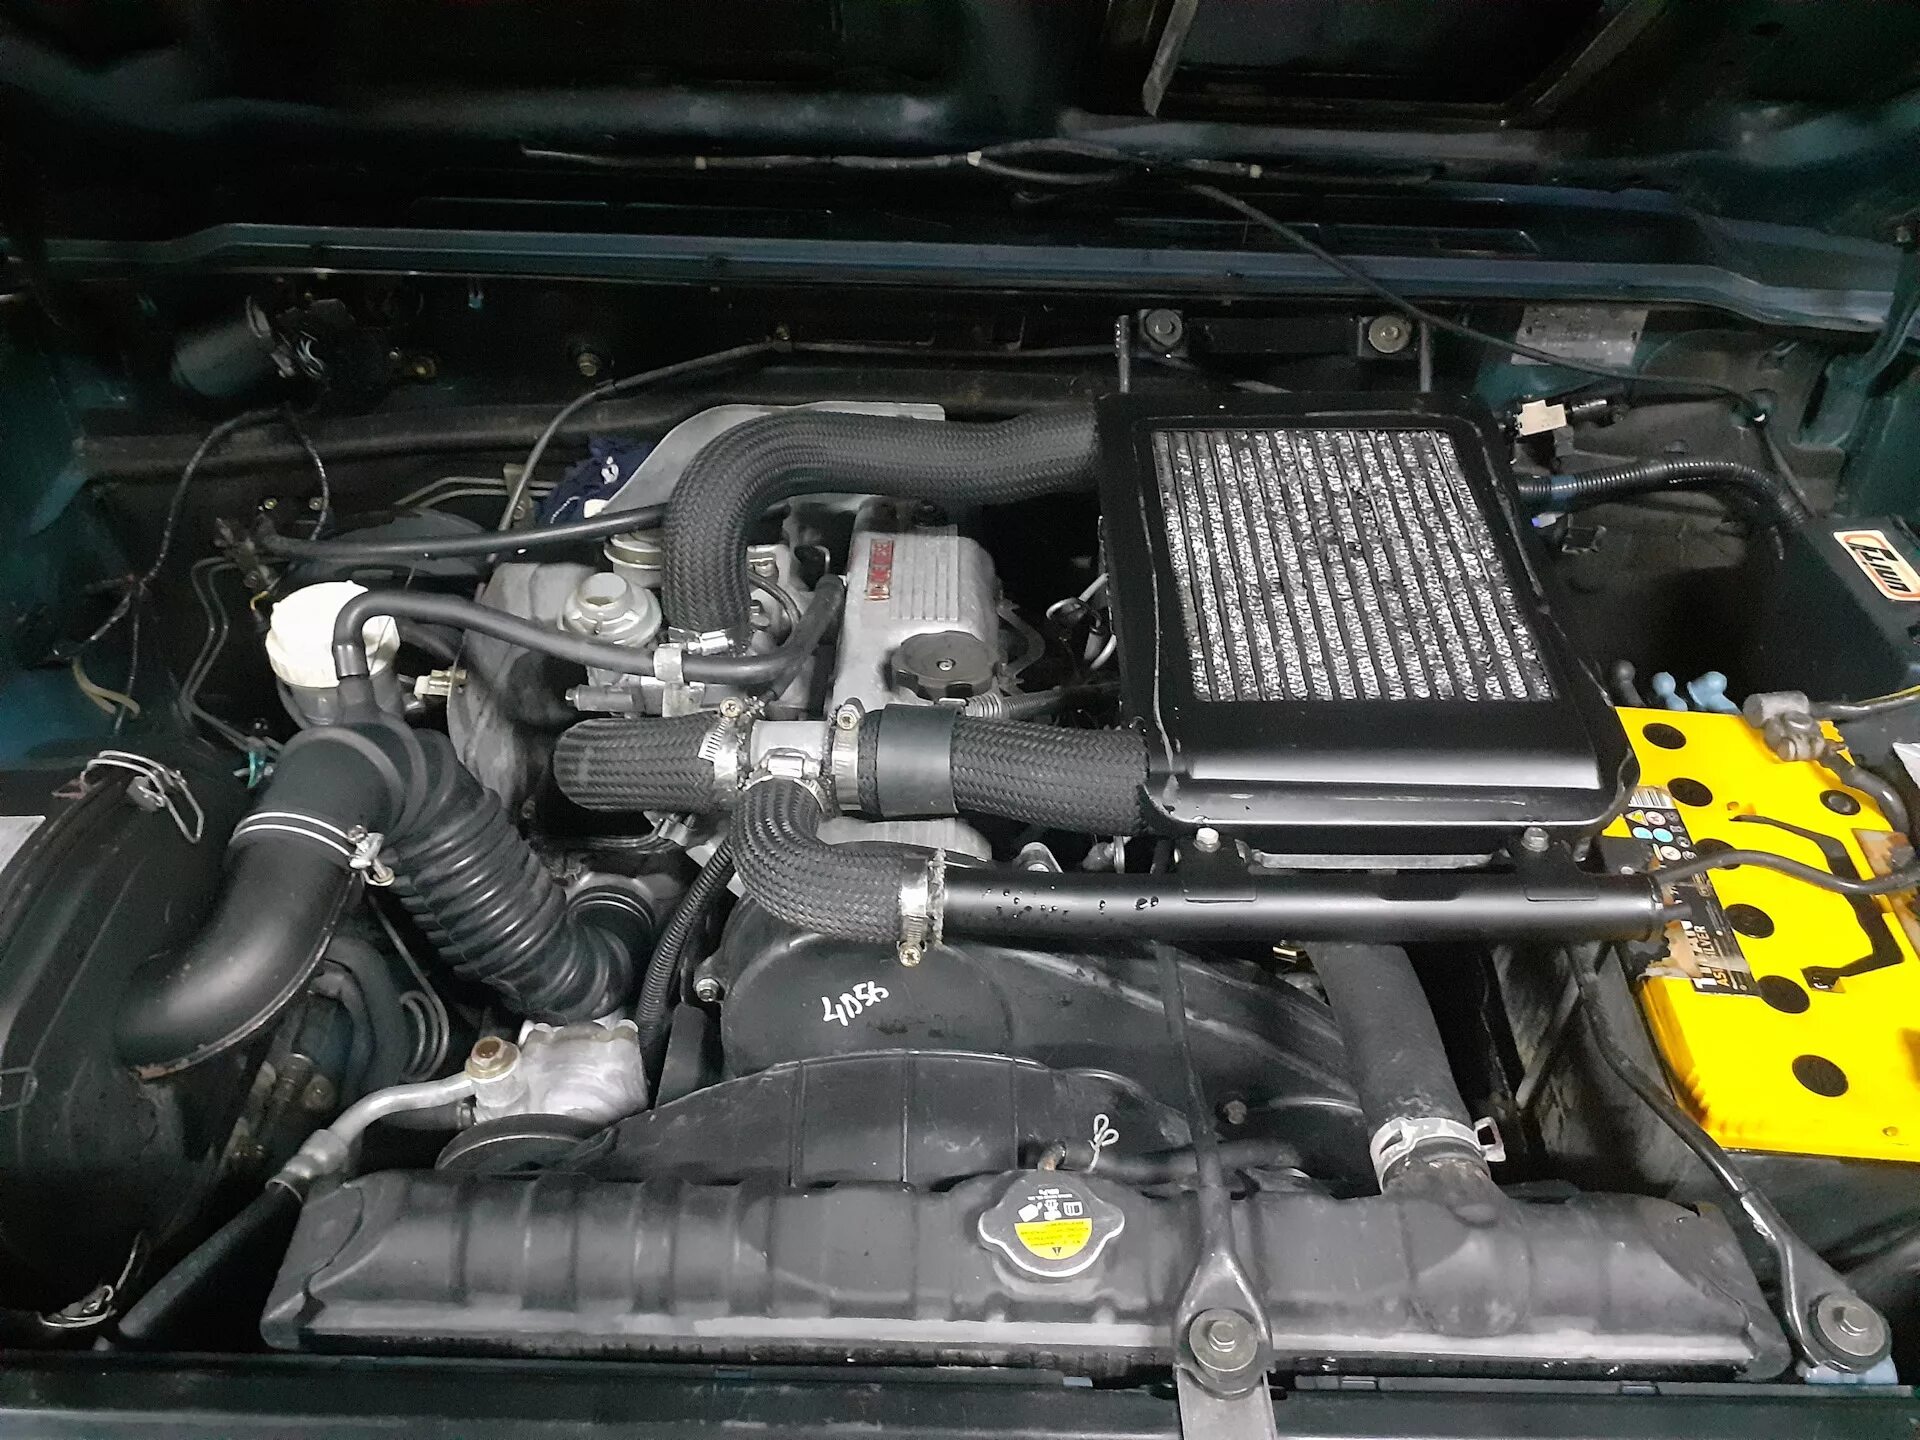 Mitsubishi Pajero Intercooler Turbo. Паджеро спорт дизель 2.2 турбо. Mitsubishi интеркулер 2800. Интеркулер Мицубиси Паджеро.